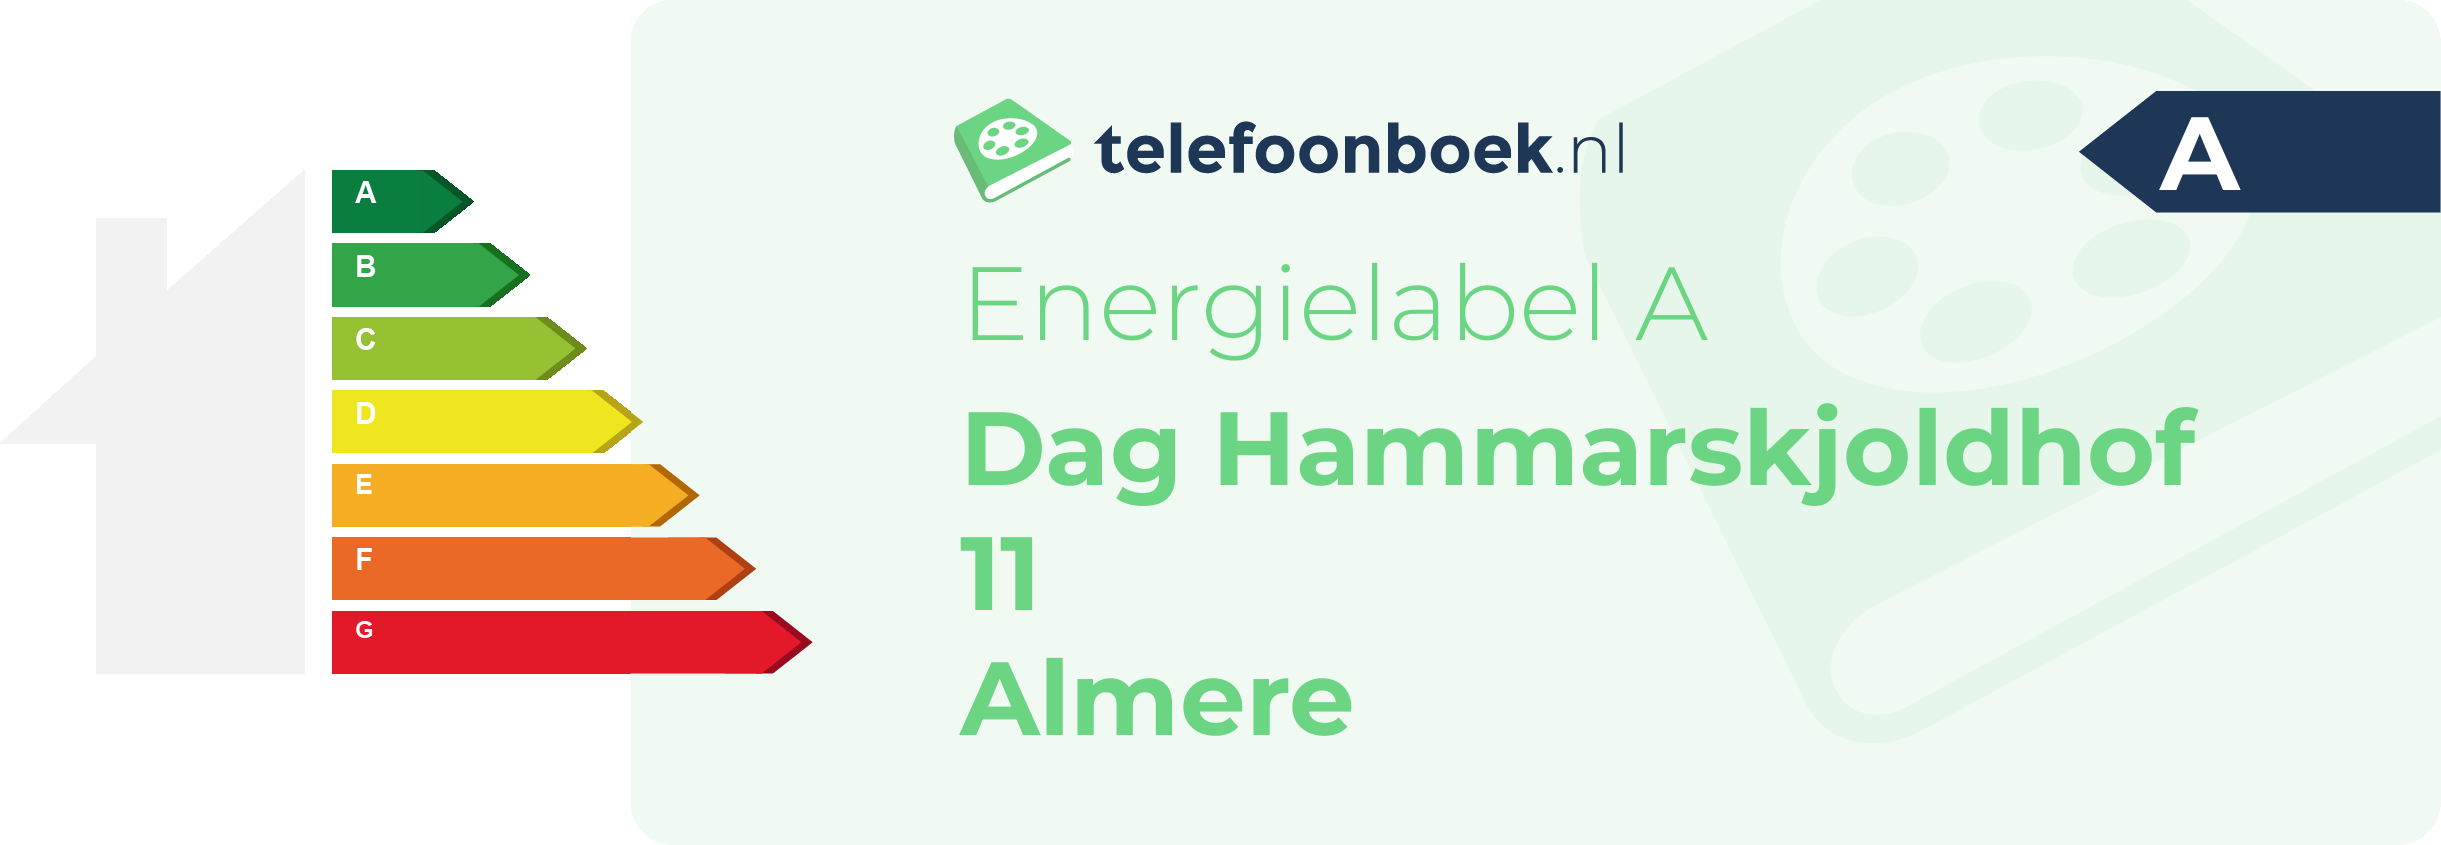 Energielabel Dag Hammarskjoldhof 11 Almere